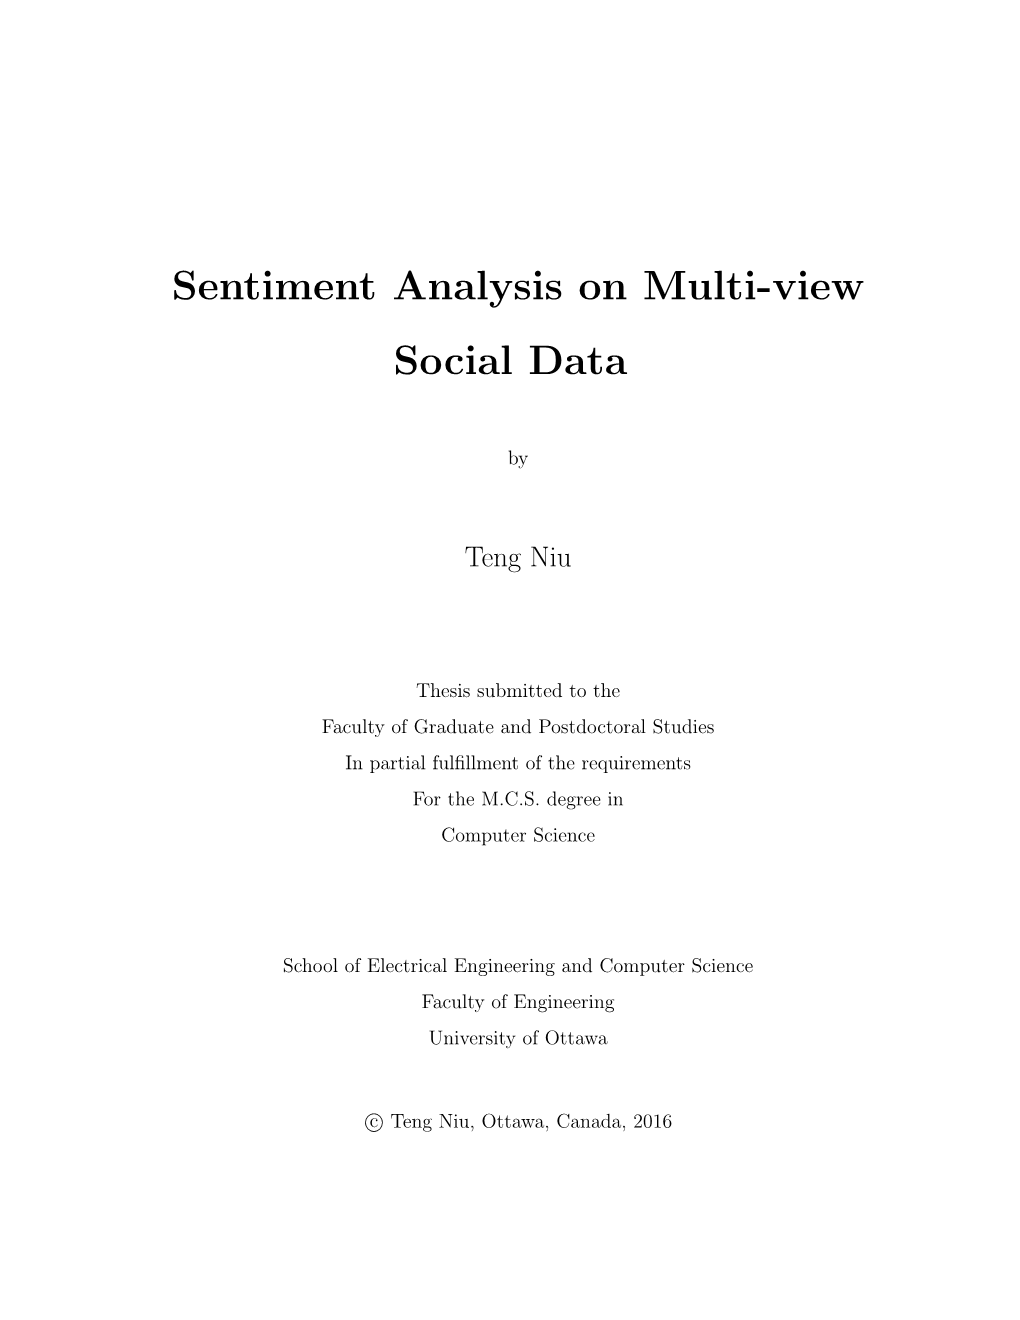 Sentiment Analysis on Multi-View Social Data